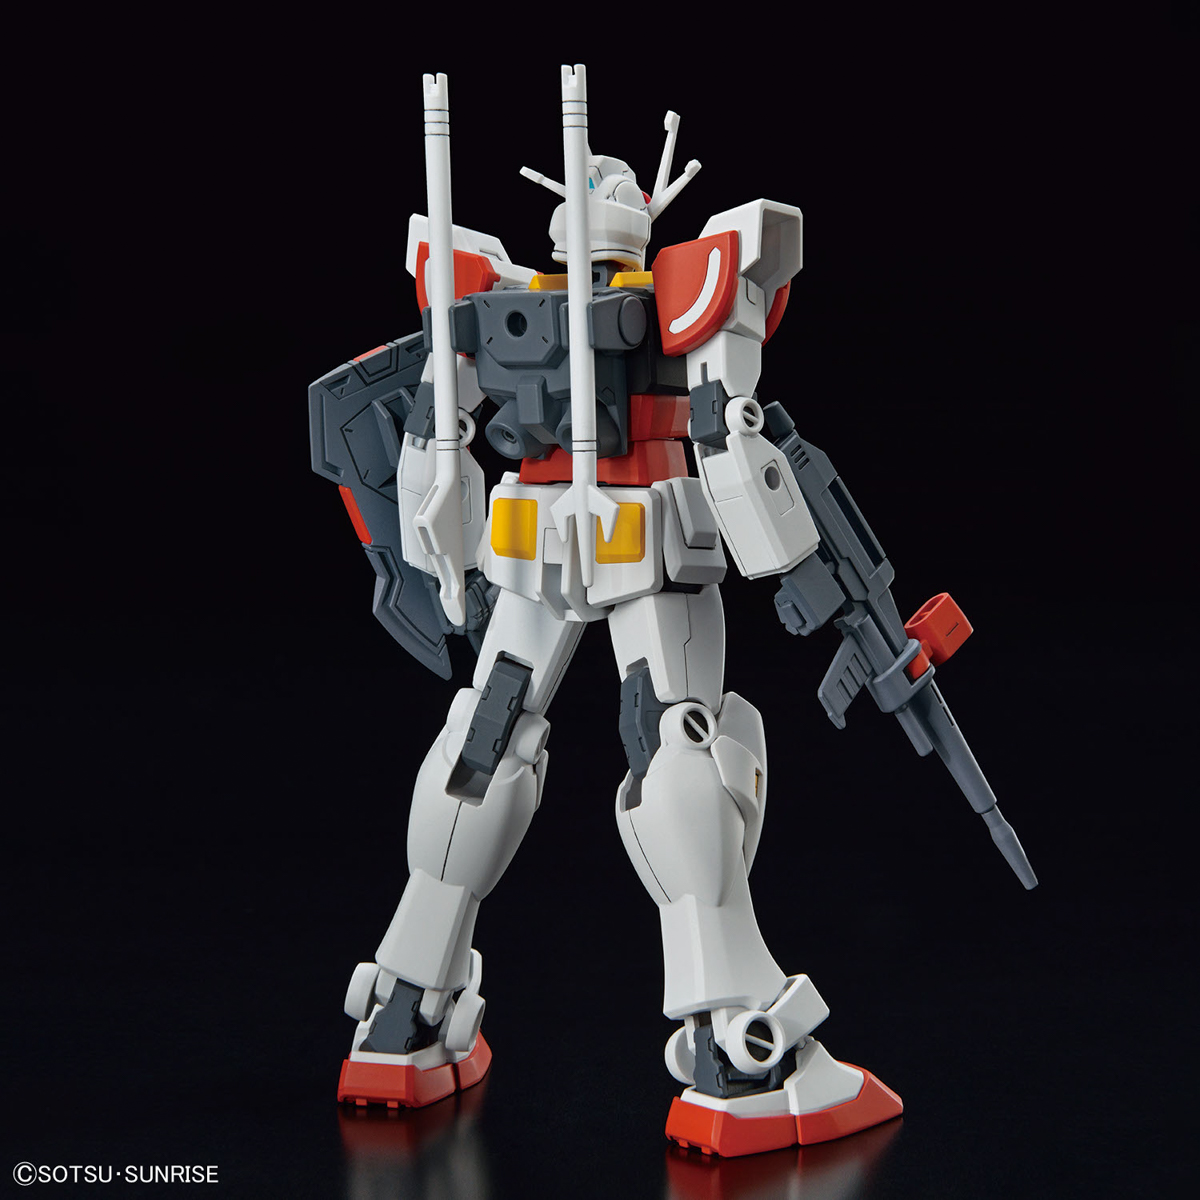 1/144 ENTRY GRADE Ra Gundam (Gundam Build Metaverse)